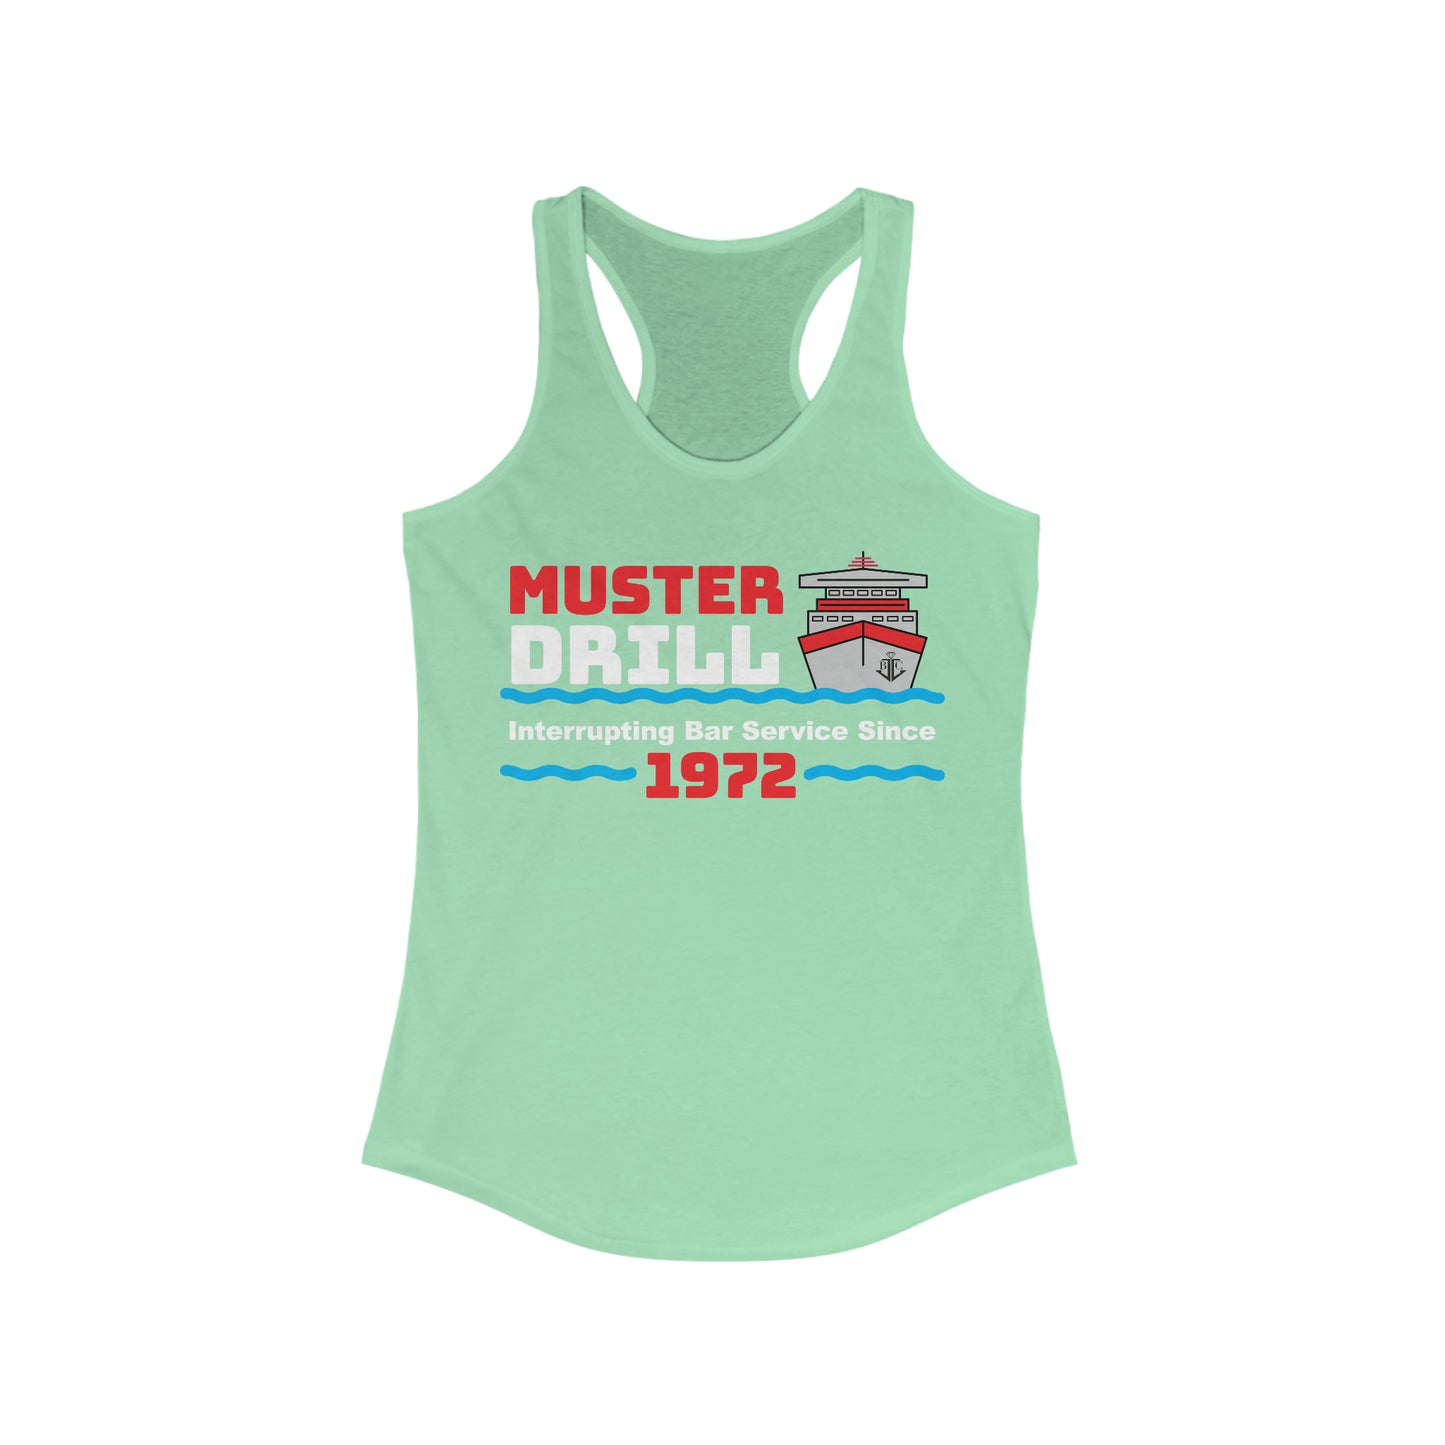 Muster Drill Interrupting Bar Service Since 1972–Women's Ideal Racerback Tank